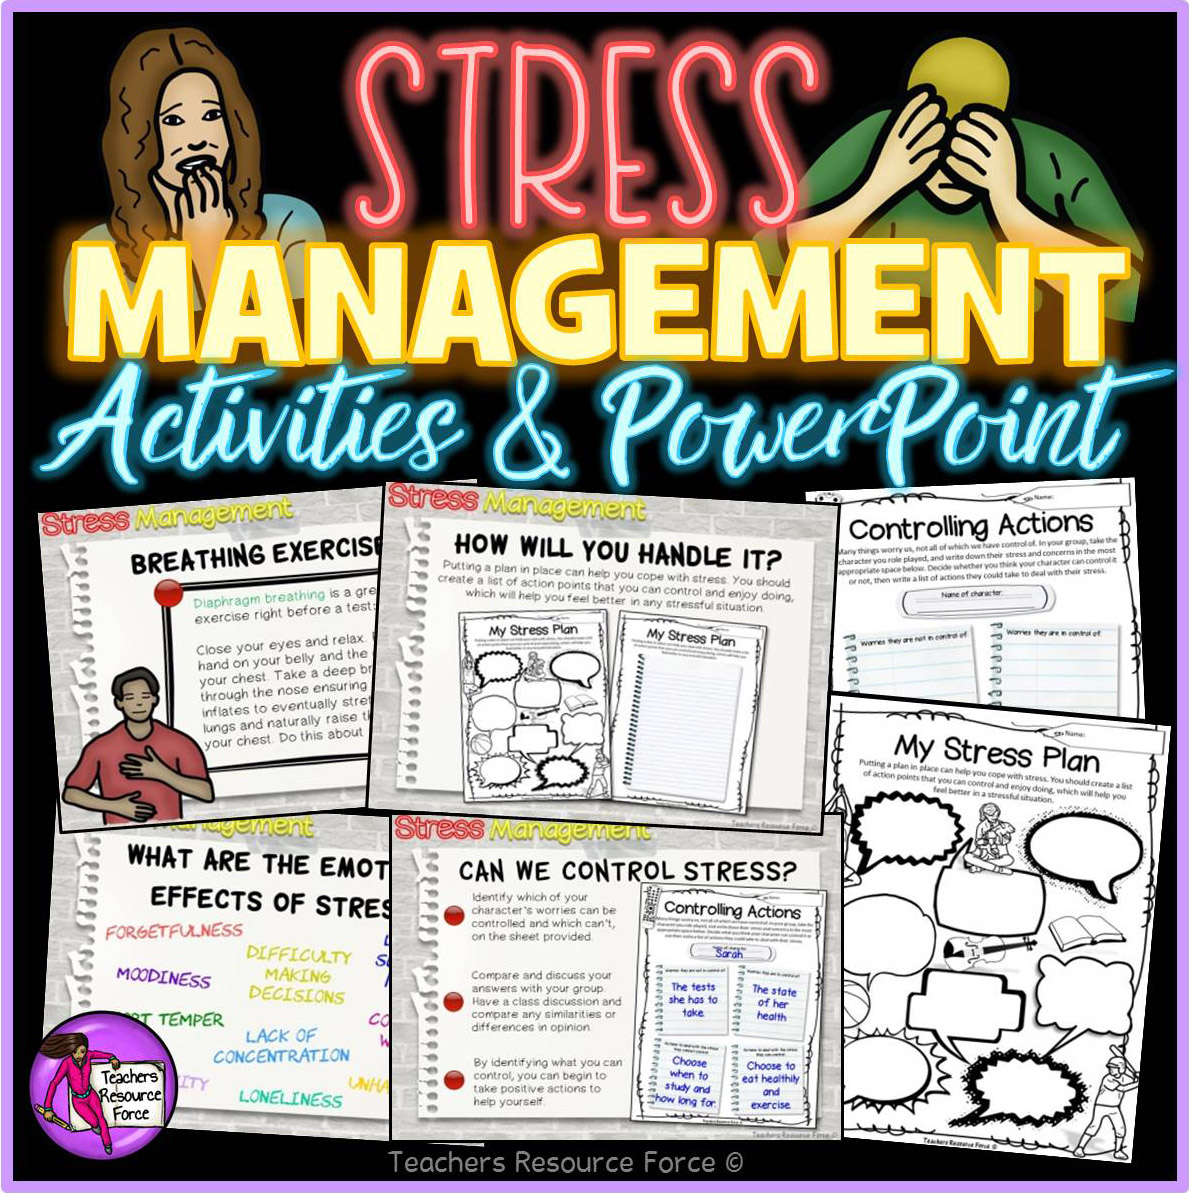 stress management presentation for high school students